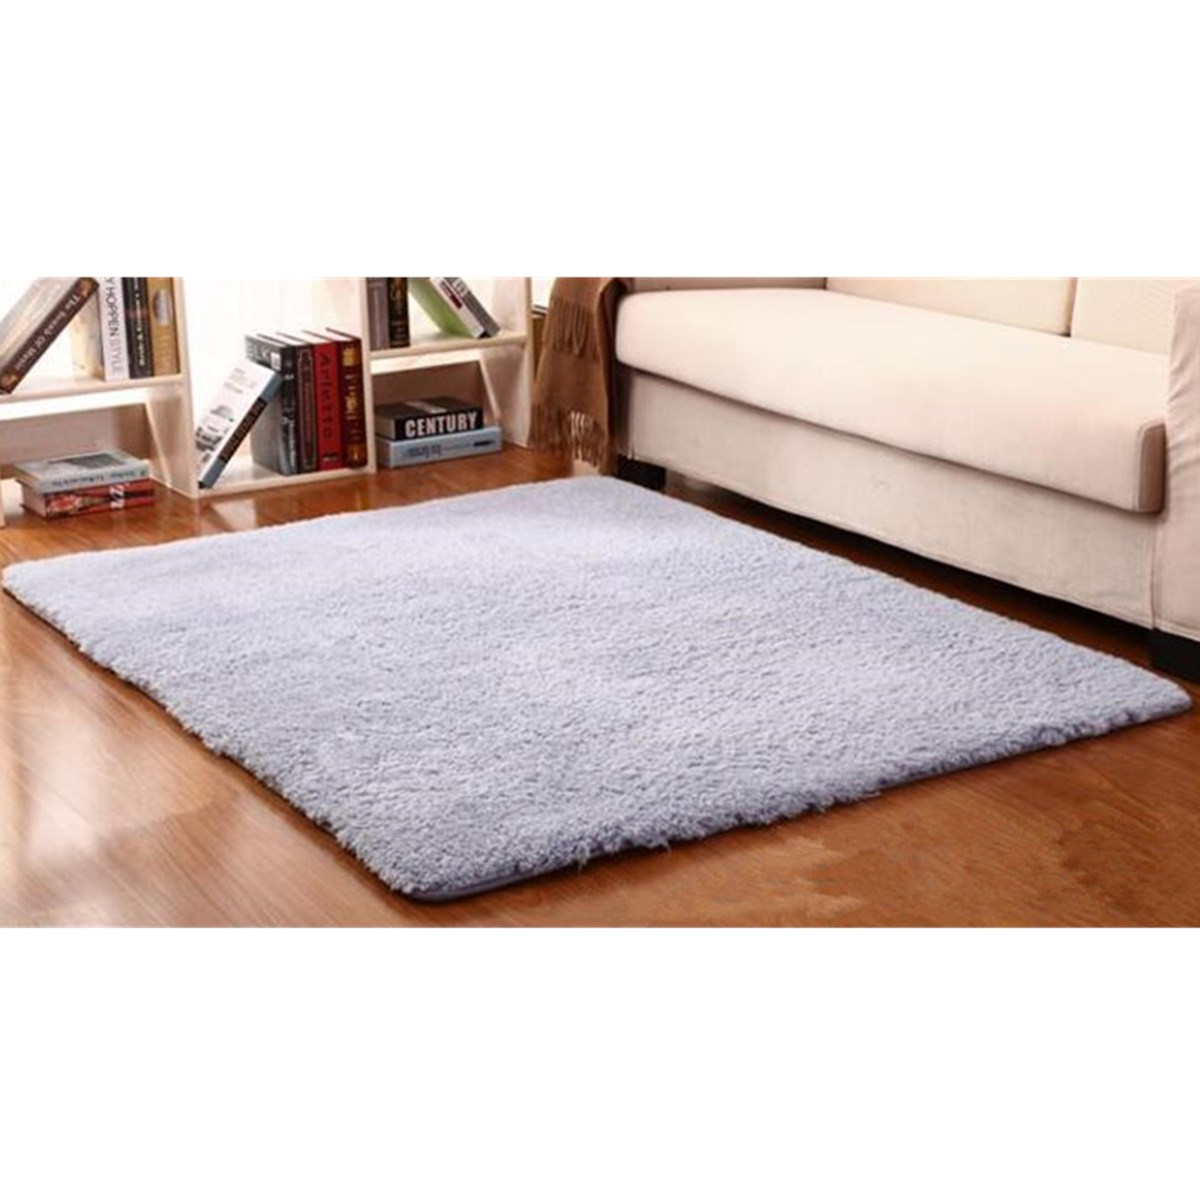 Modern-Non-slip-Polyester-Carpet-Area-Rug-Bedroom-Linving-Room-Floor-Bath-Mat-1424489-7